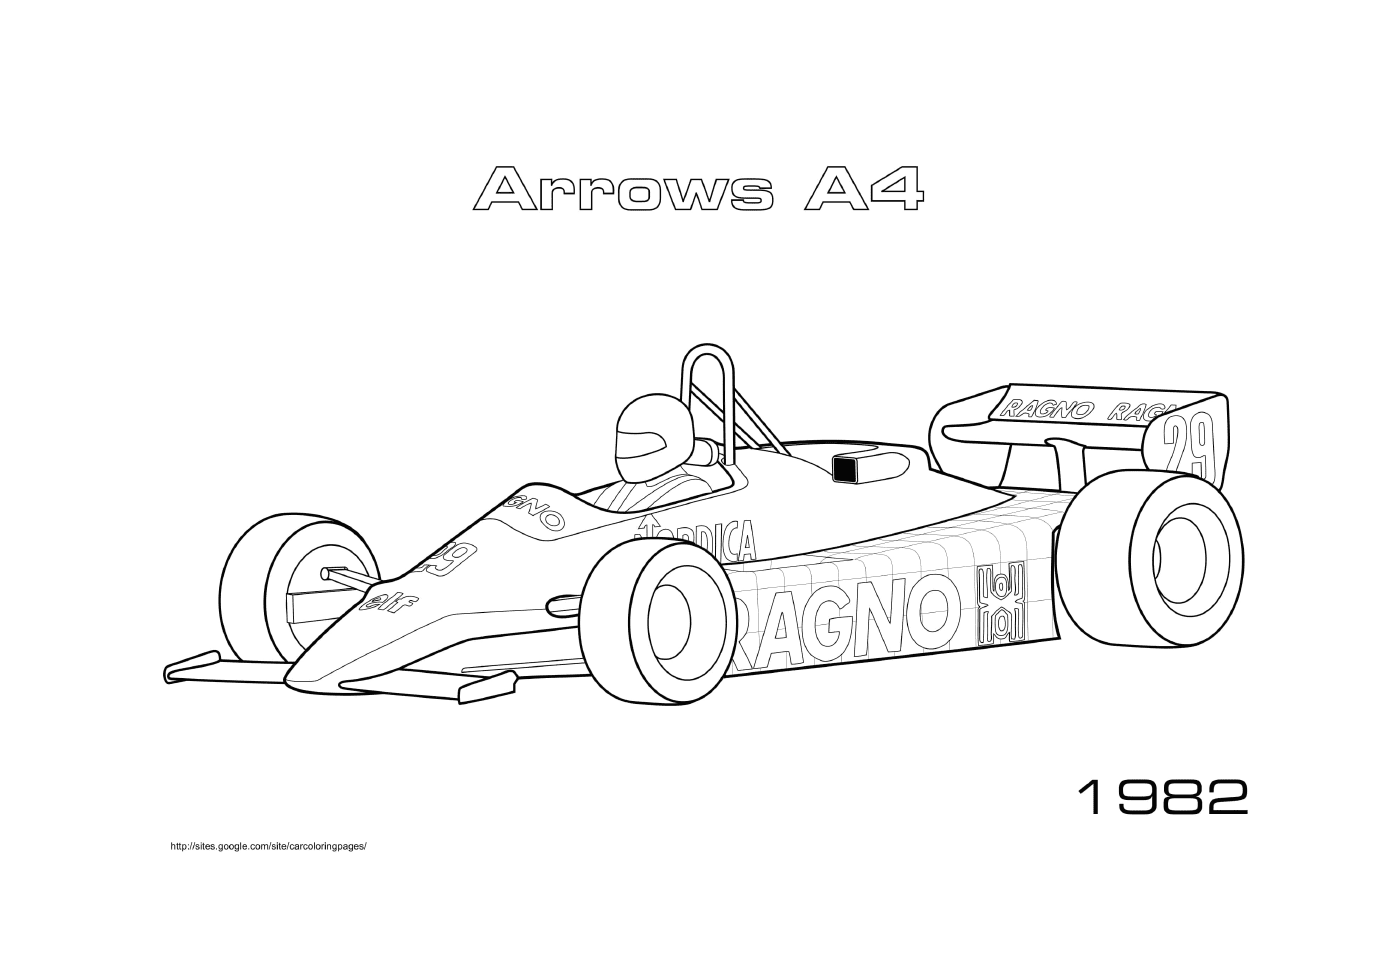   Arrows A4 de 1982 